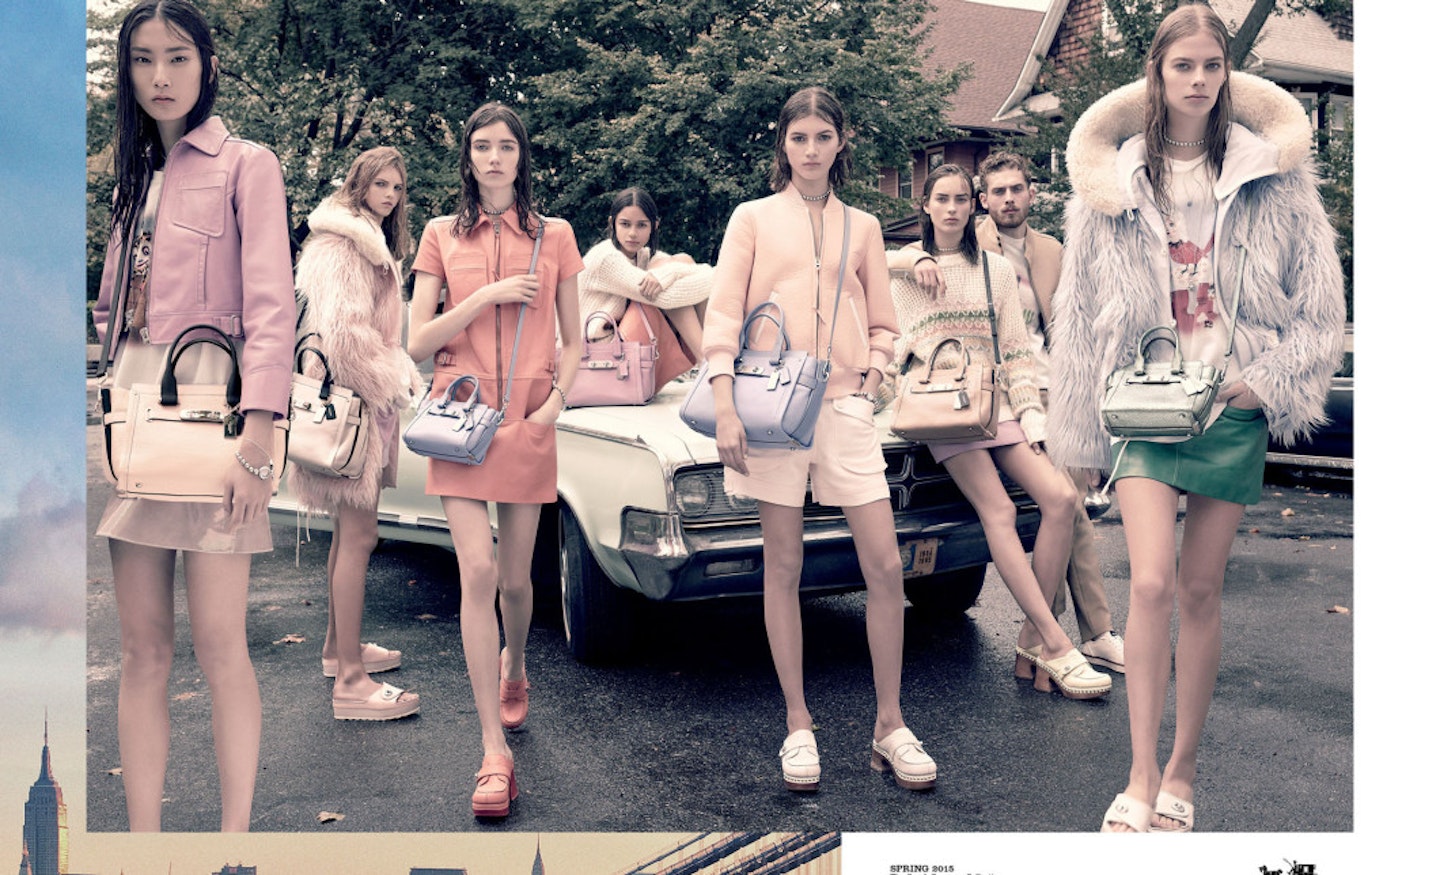 Natasha Poly is a 70s Dream in Emilio Pucci's Spring 2015 Ads